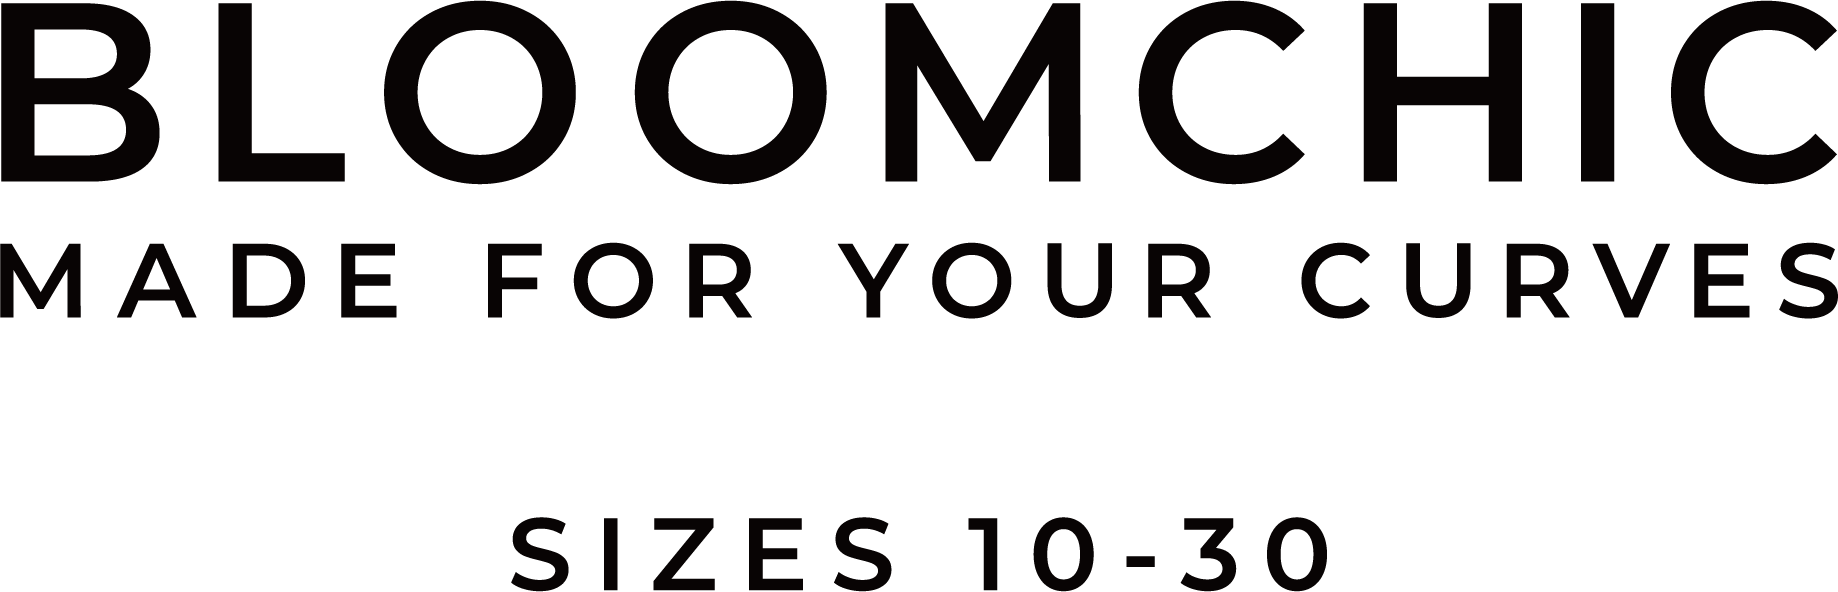 bloomchic logo